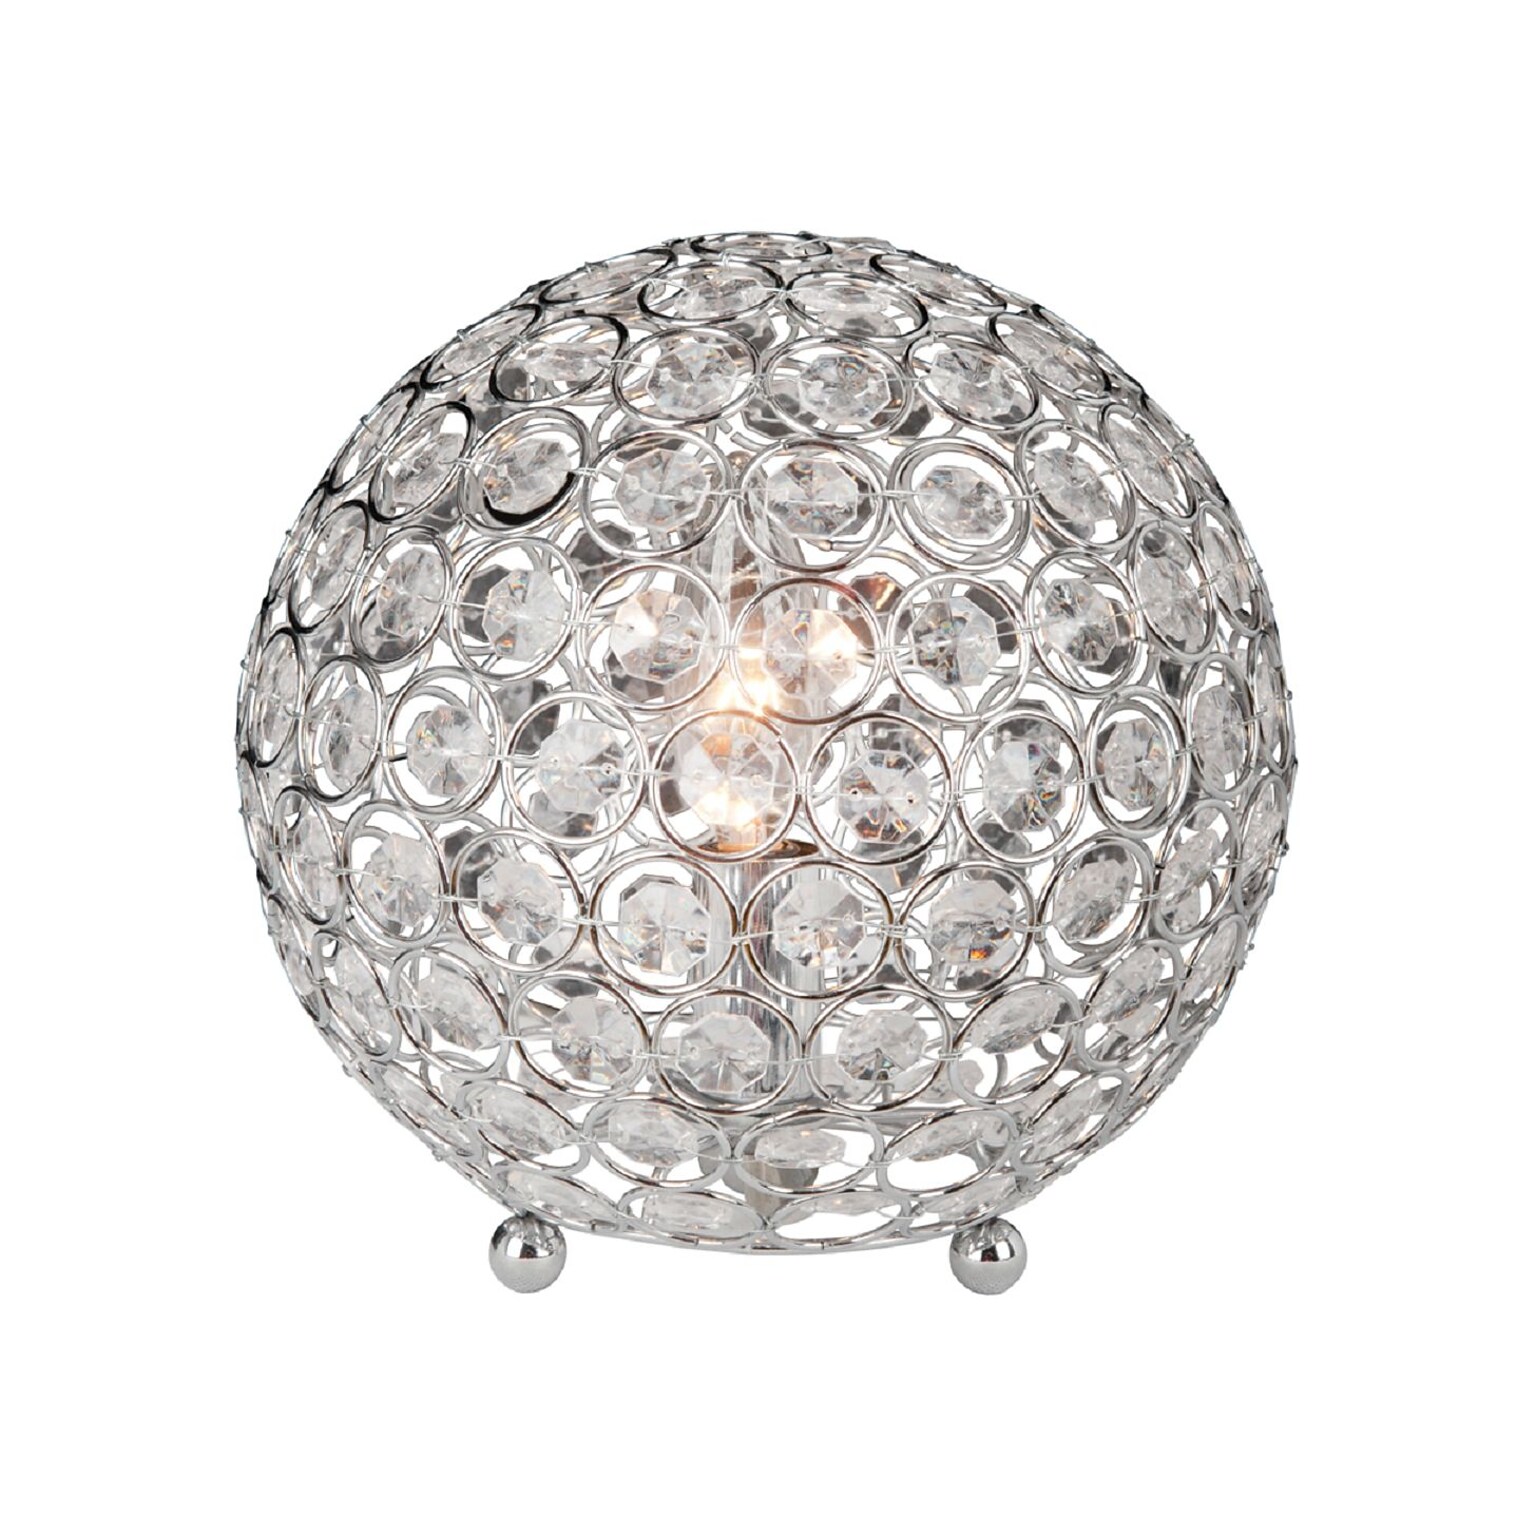 Elegant Designs Crystal Ball Table Lamp, Chrome Plated Finish